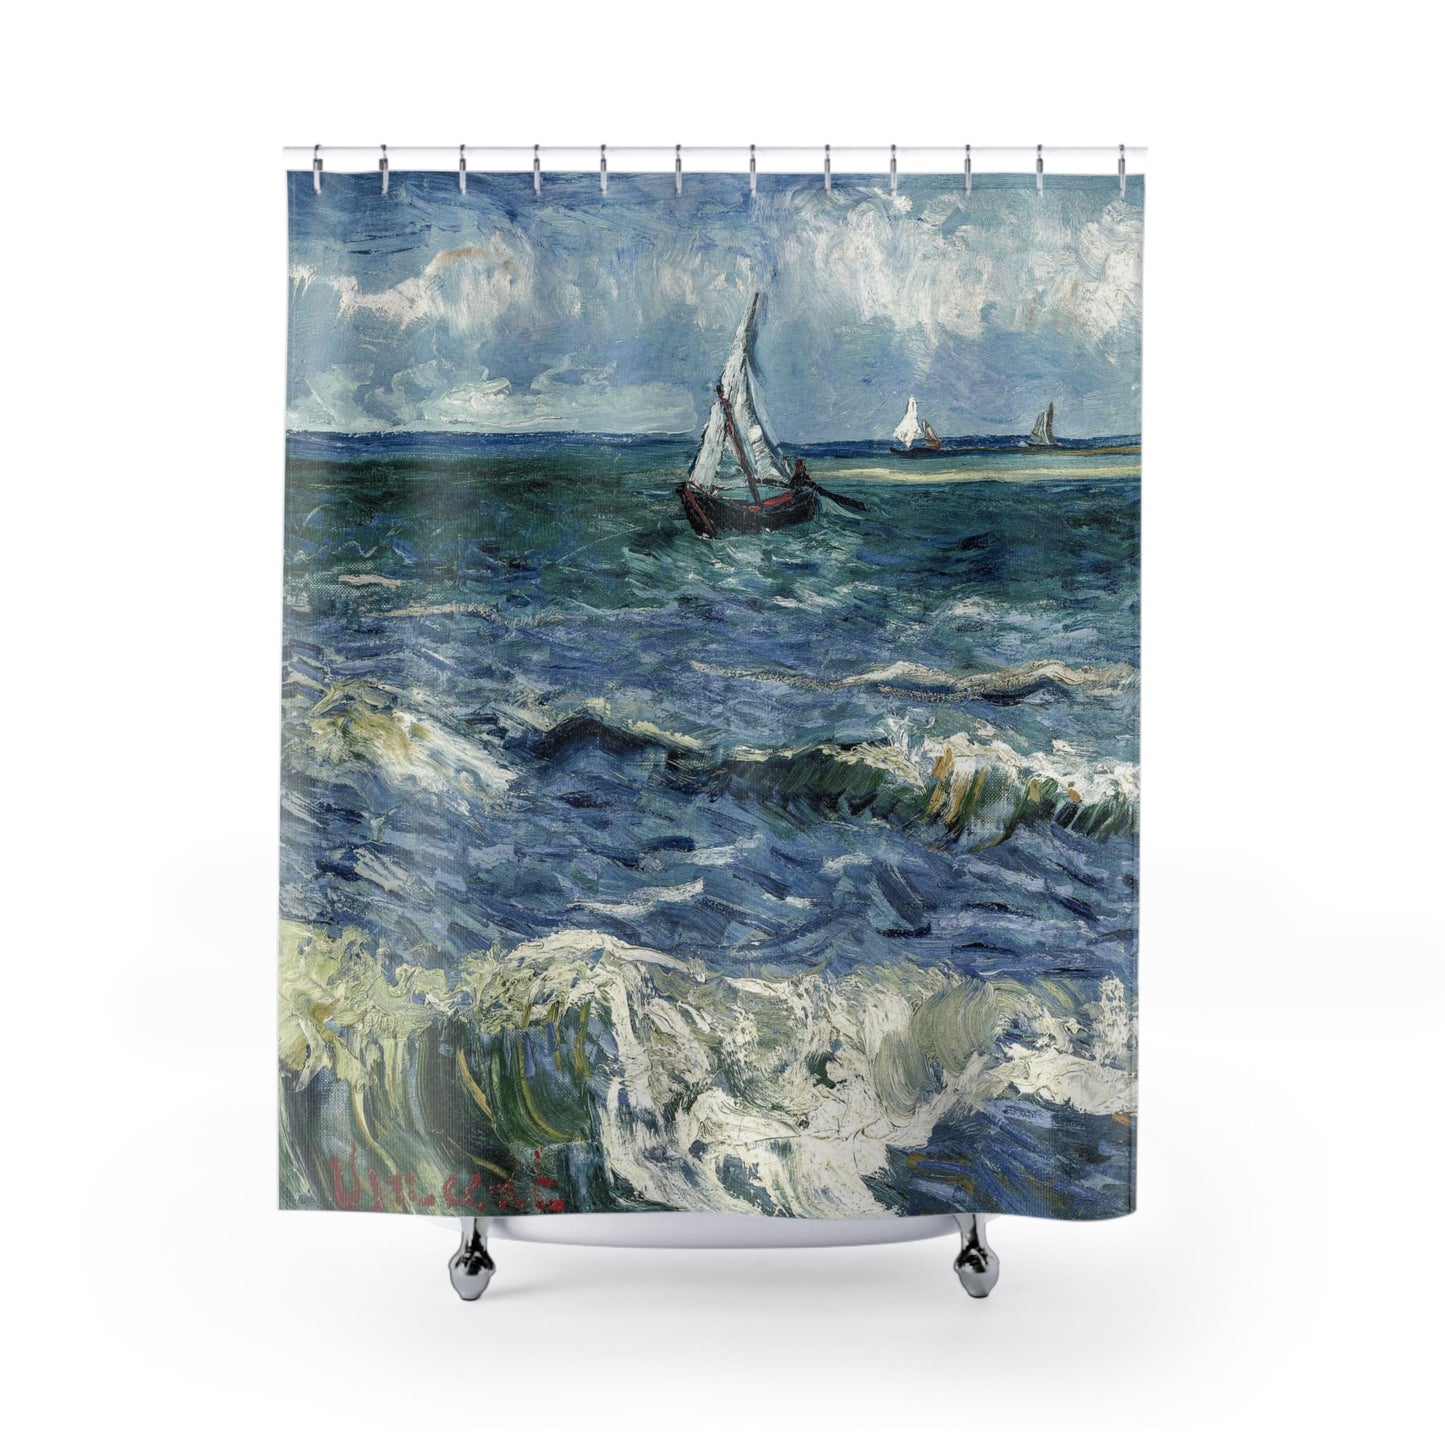 Ocean Shower Curtain with sail boat design, nautical bathroom decor featuring serene ocean scenes.